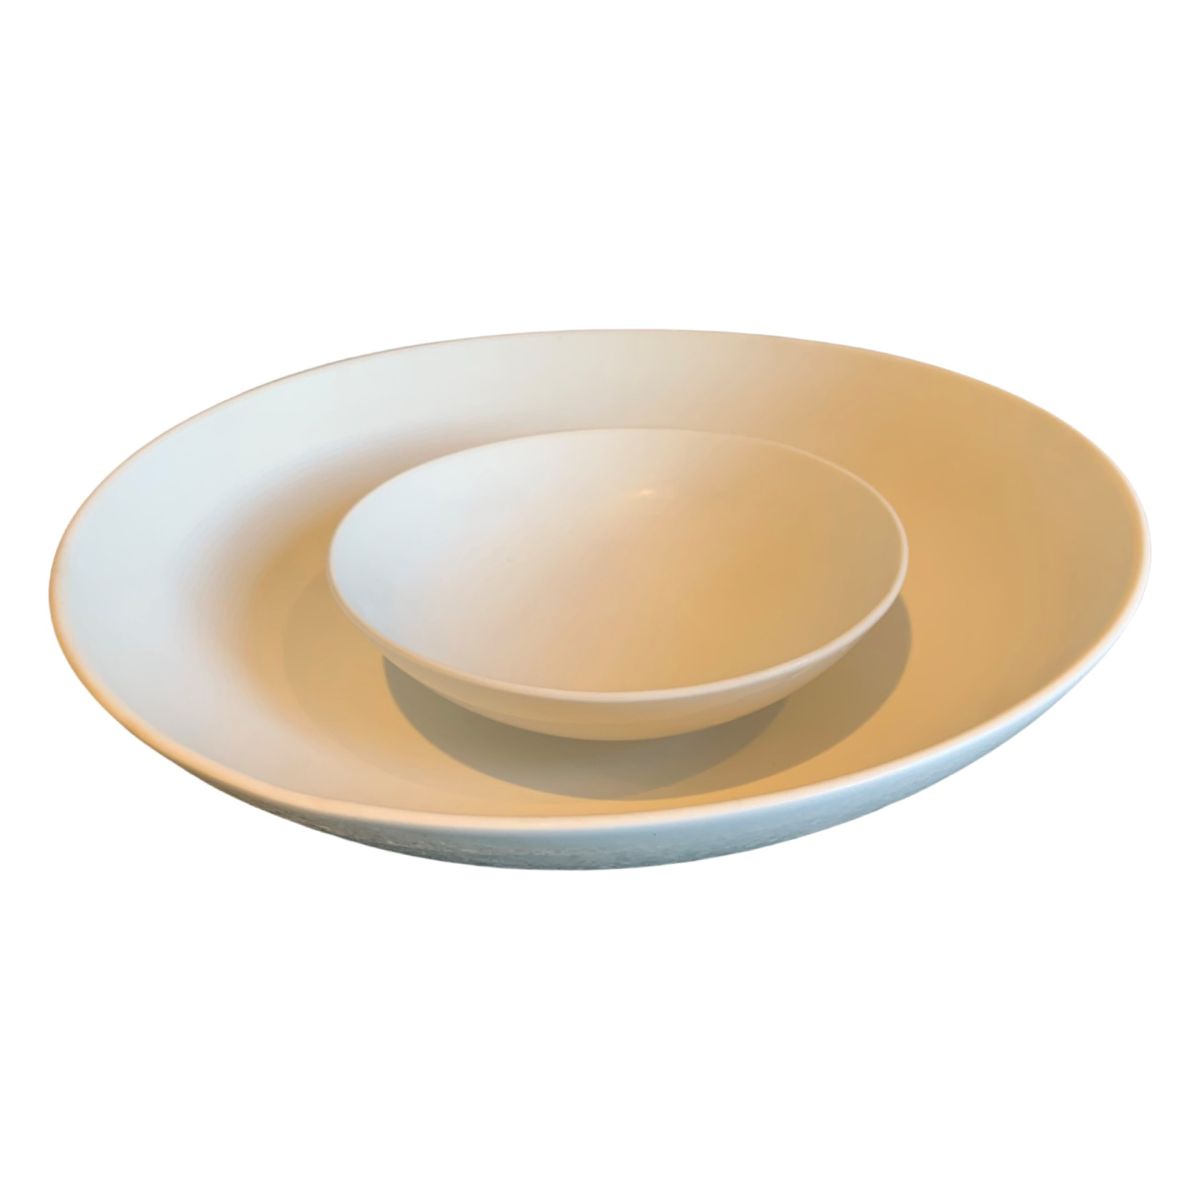 bowl rond wit porselein strak design mat glazuur 296 hg 82cmbox 2